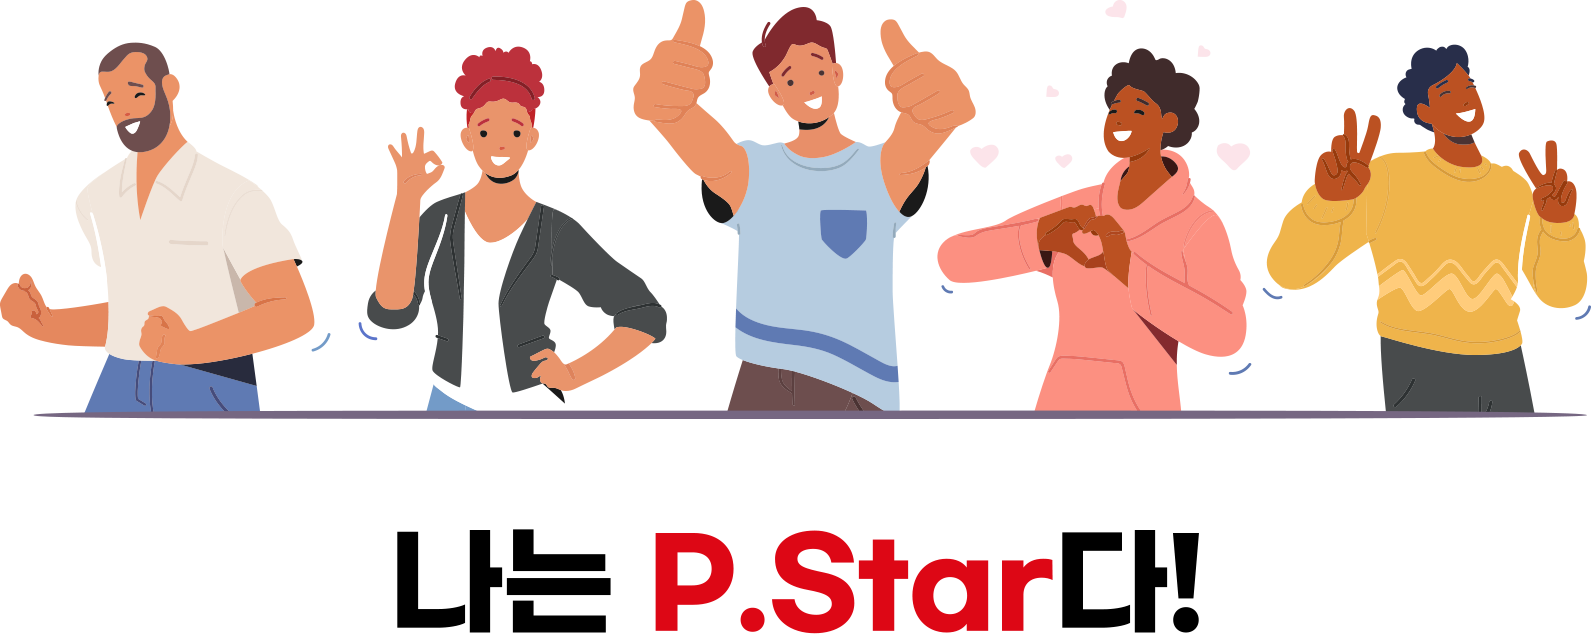 p.star